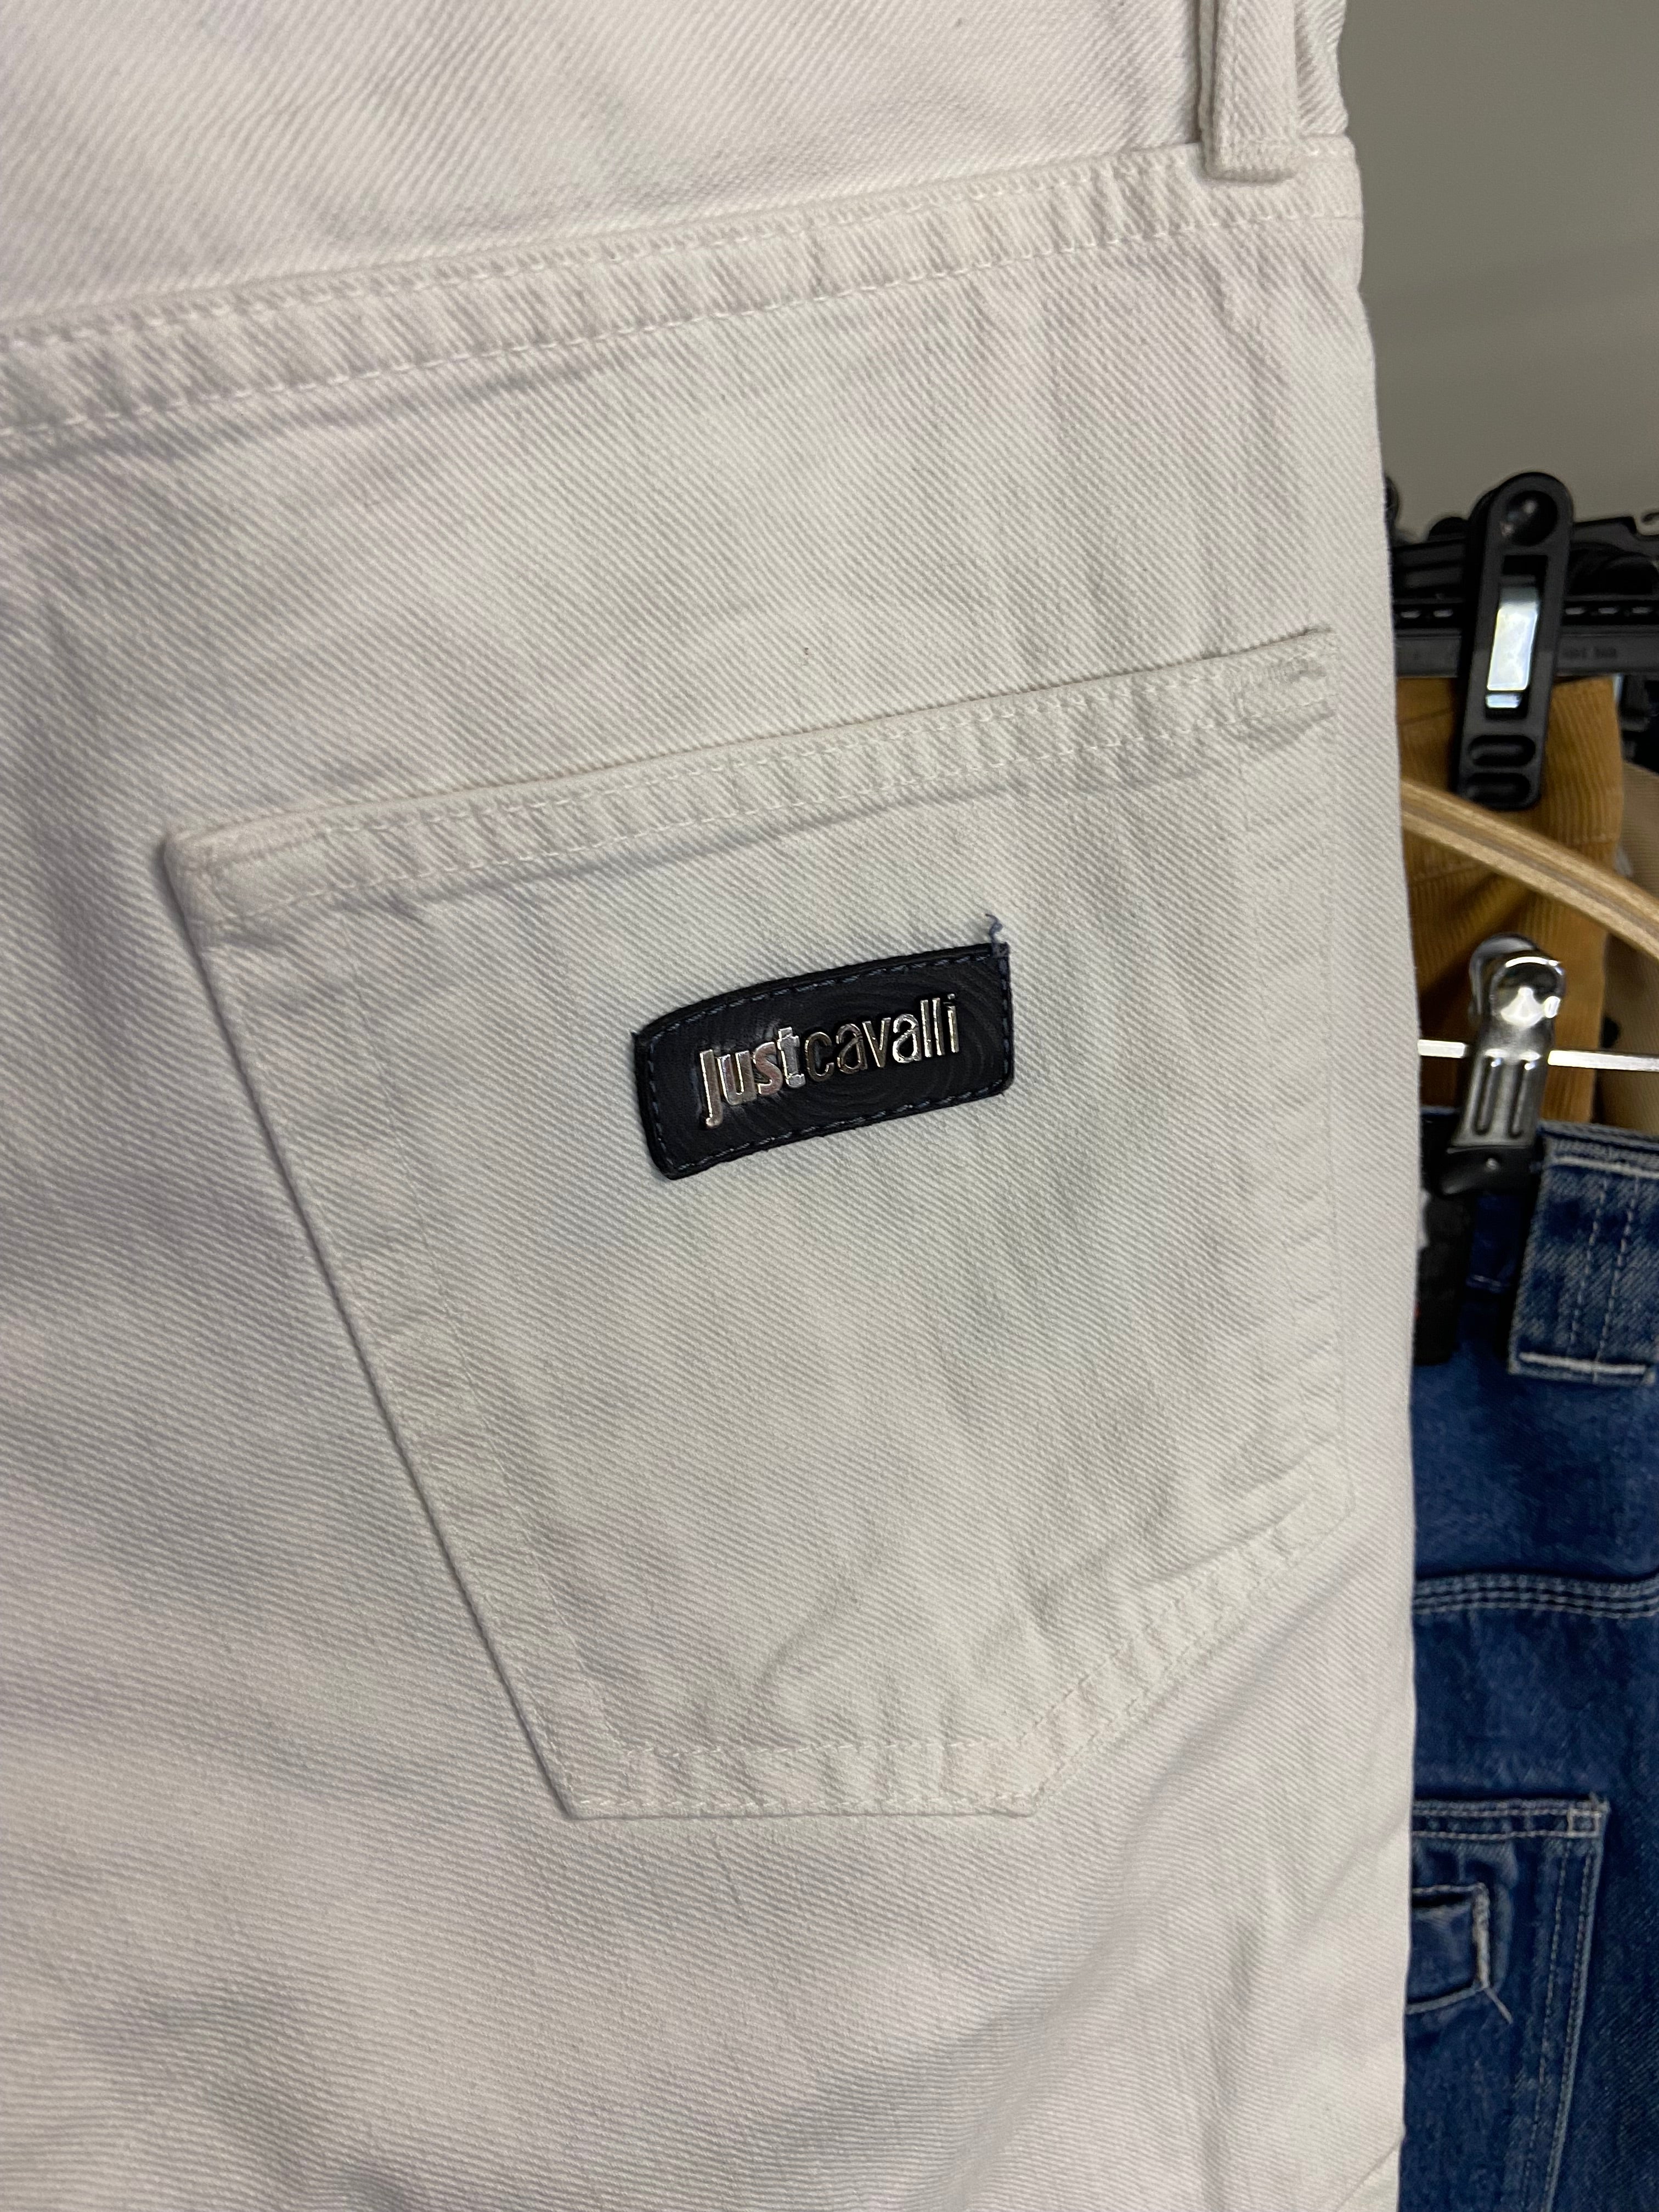 Vintage Just Cavalli White Jeans Mens 31 Straight